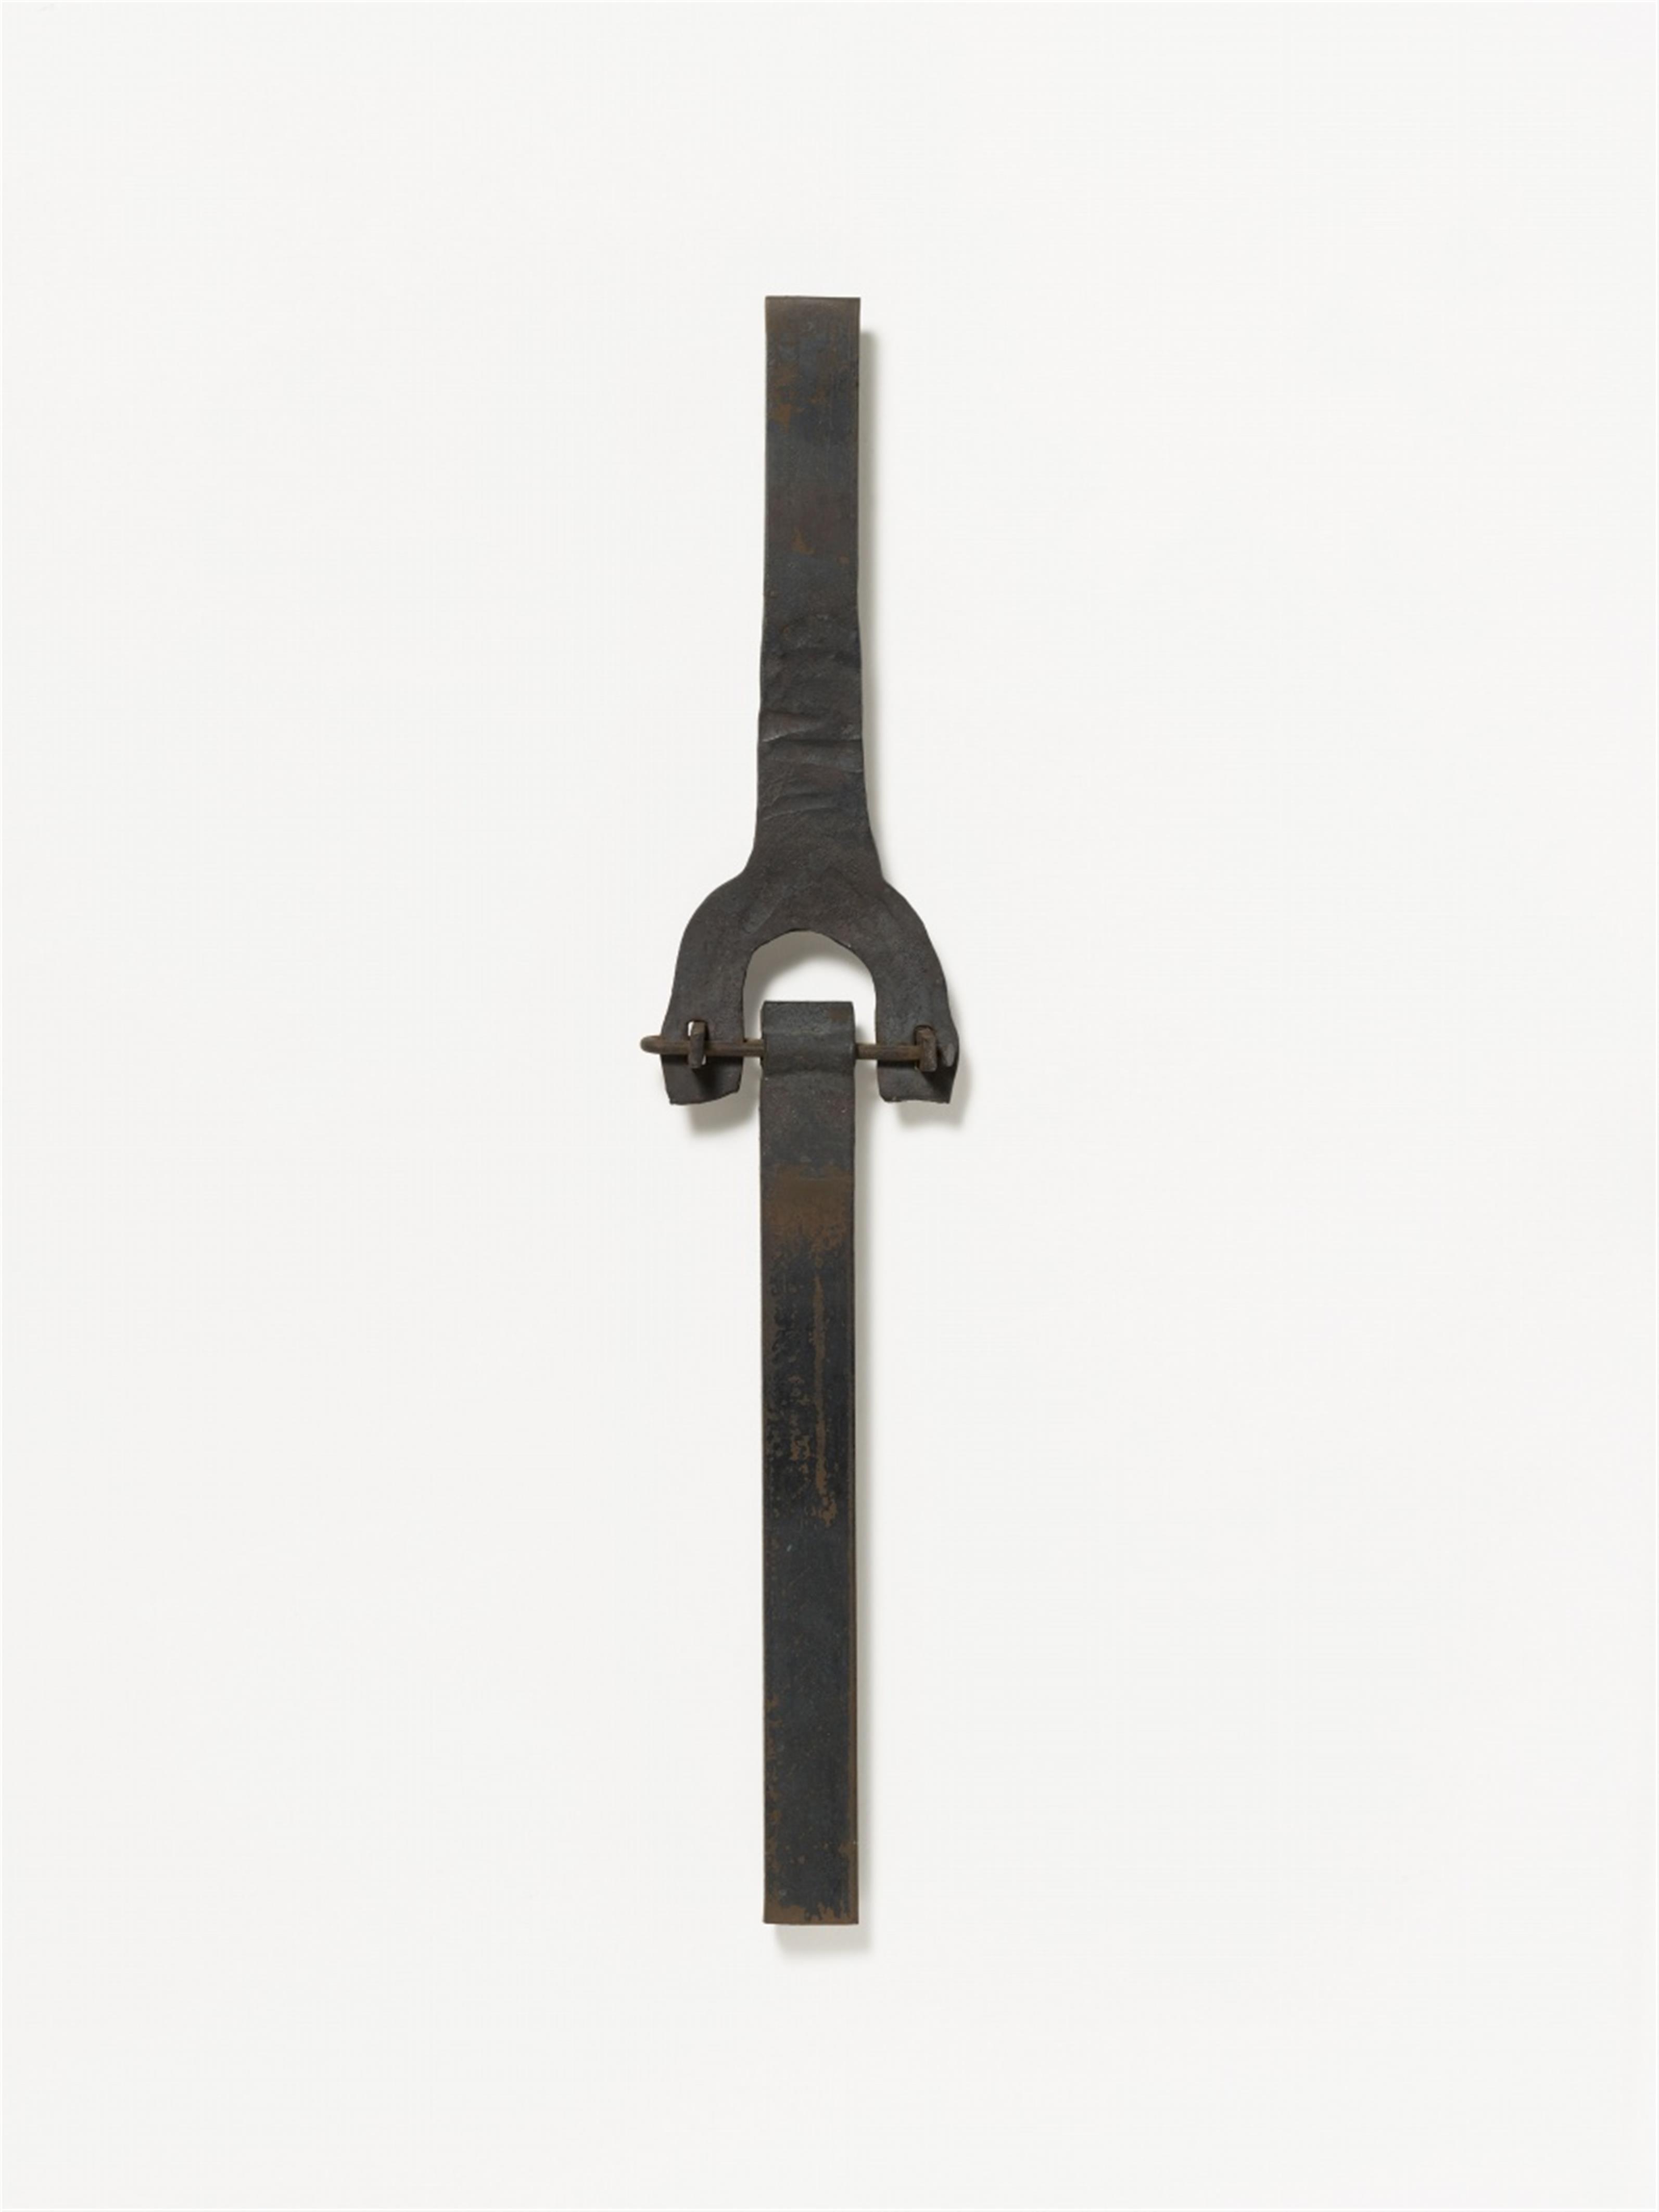 Joseph Beuys - Kettenglied zum Büdericher Kreuz - image-1